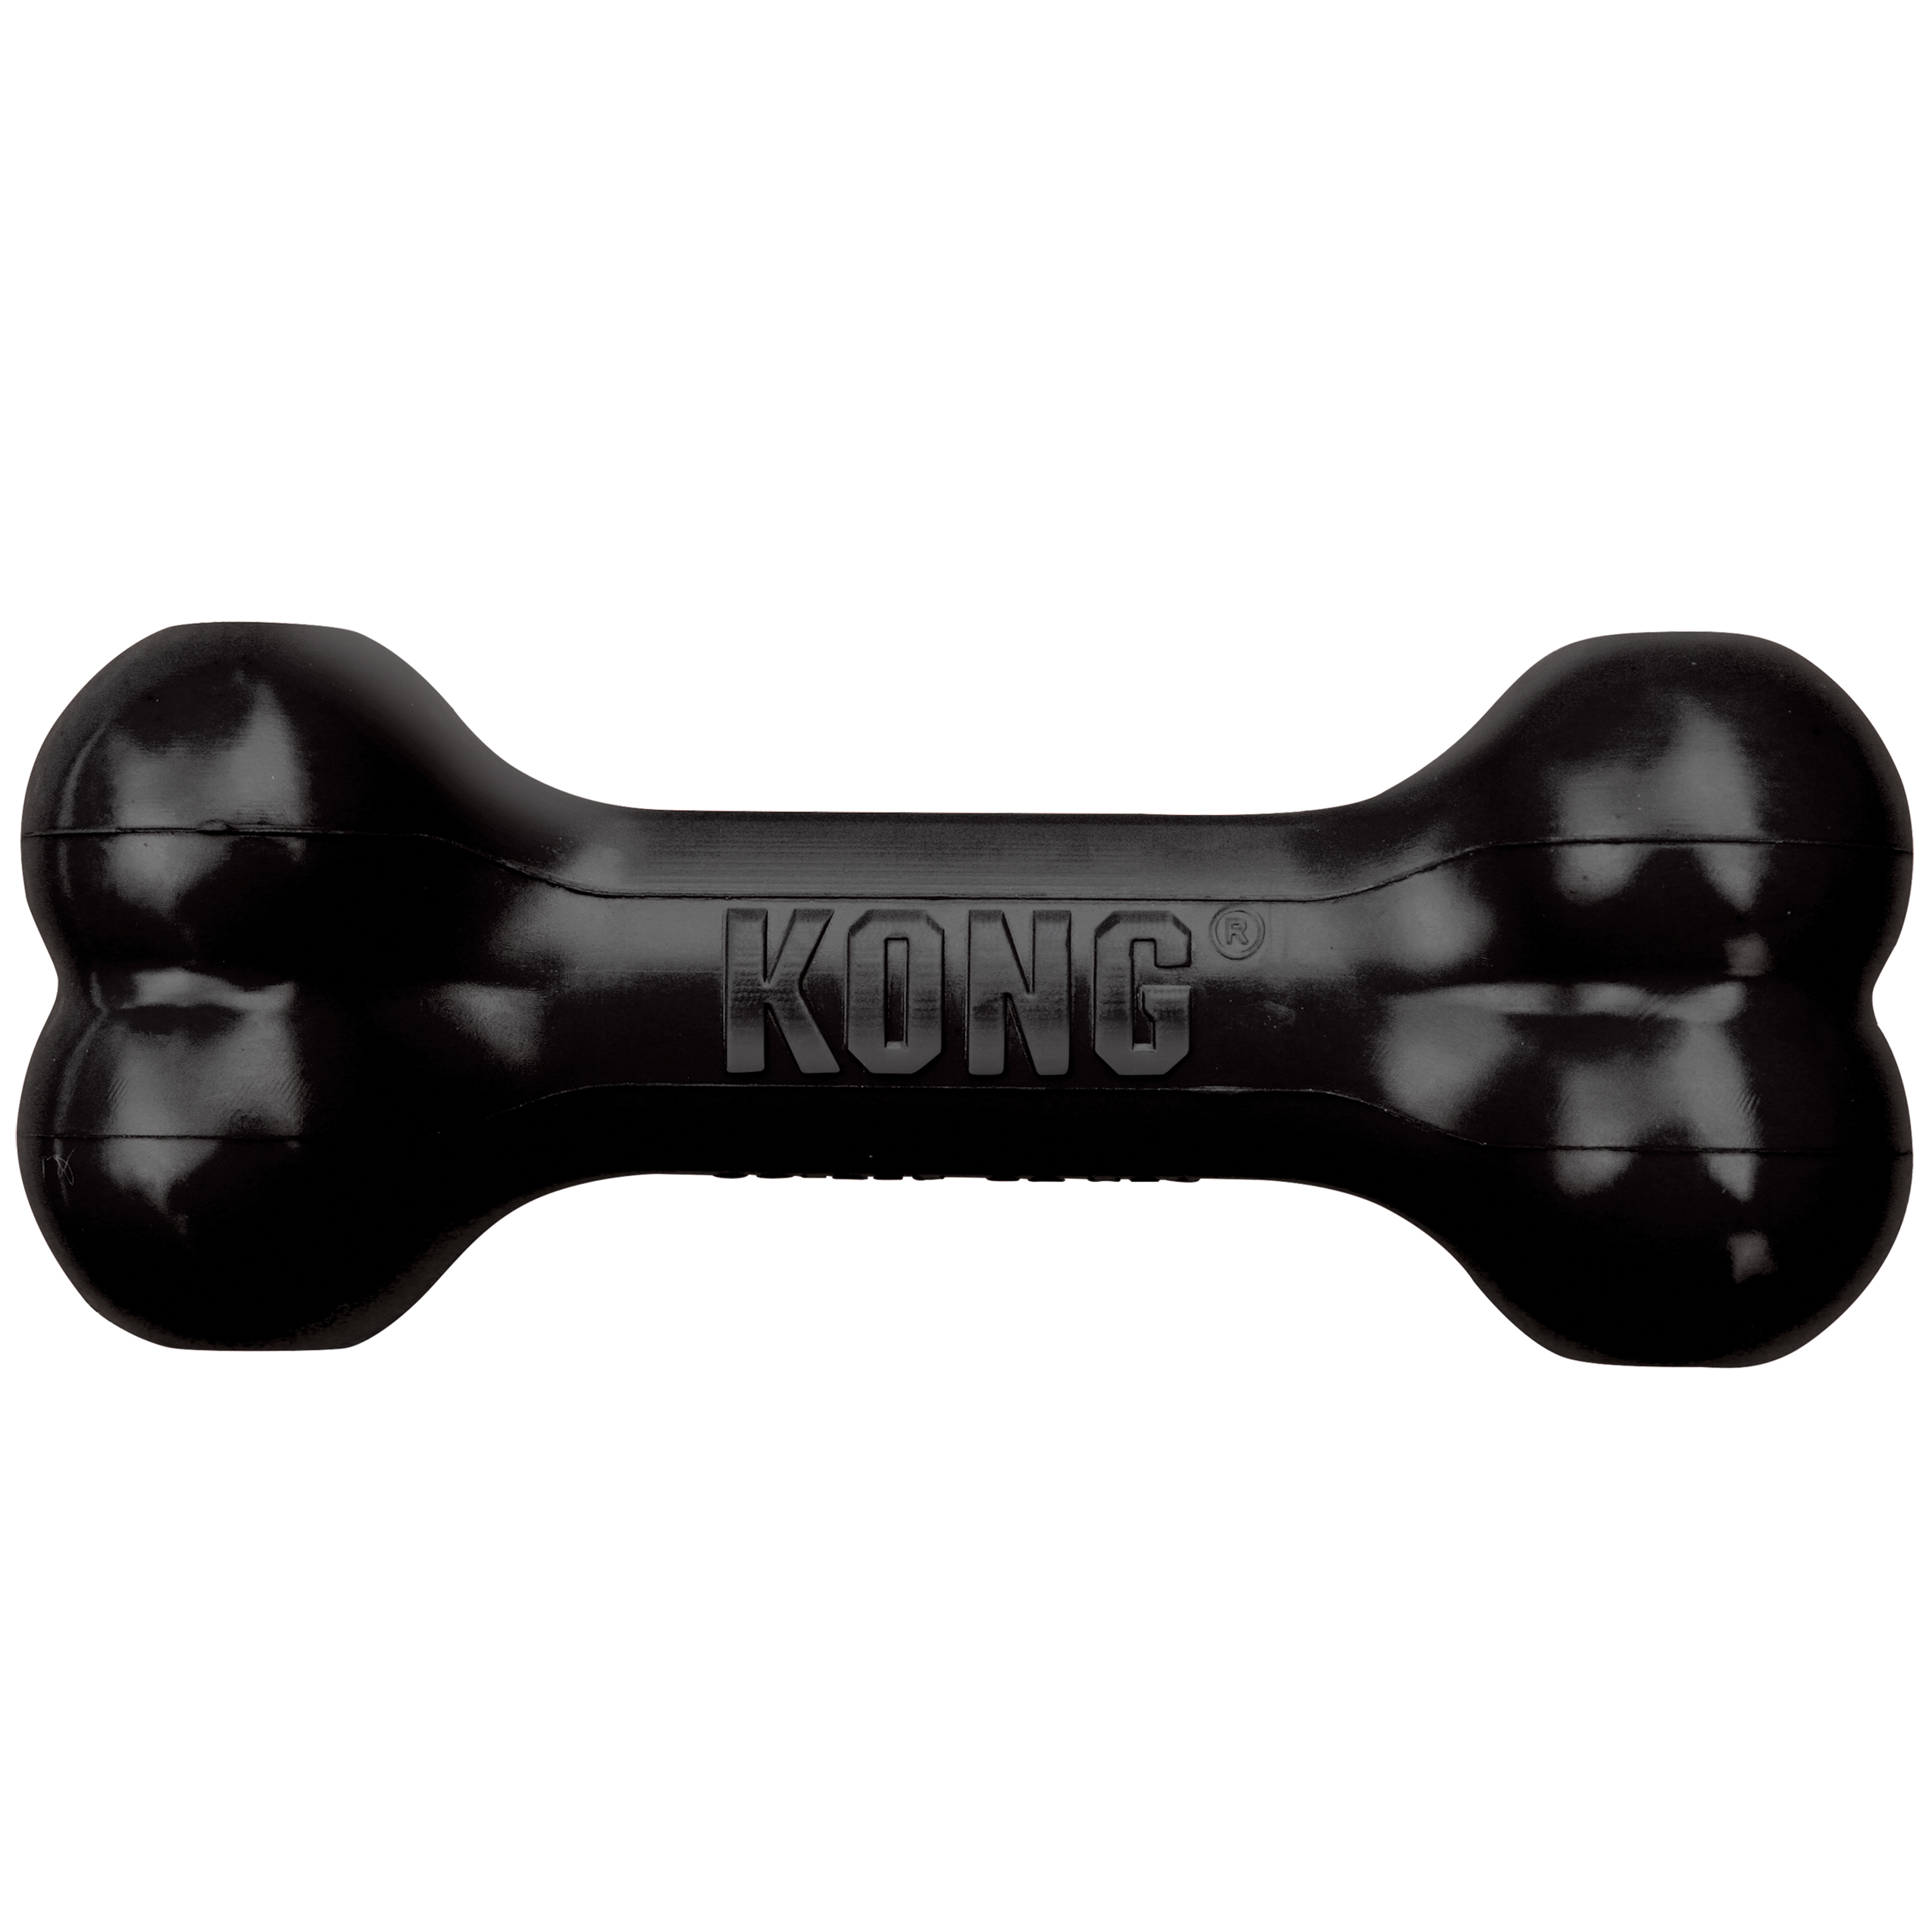 Kong extreme goodie bone black - <Product shot>